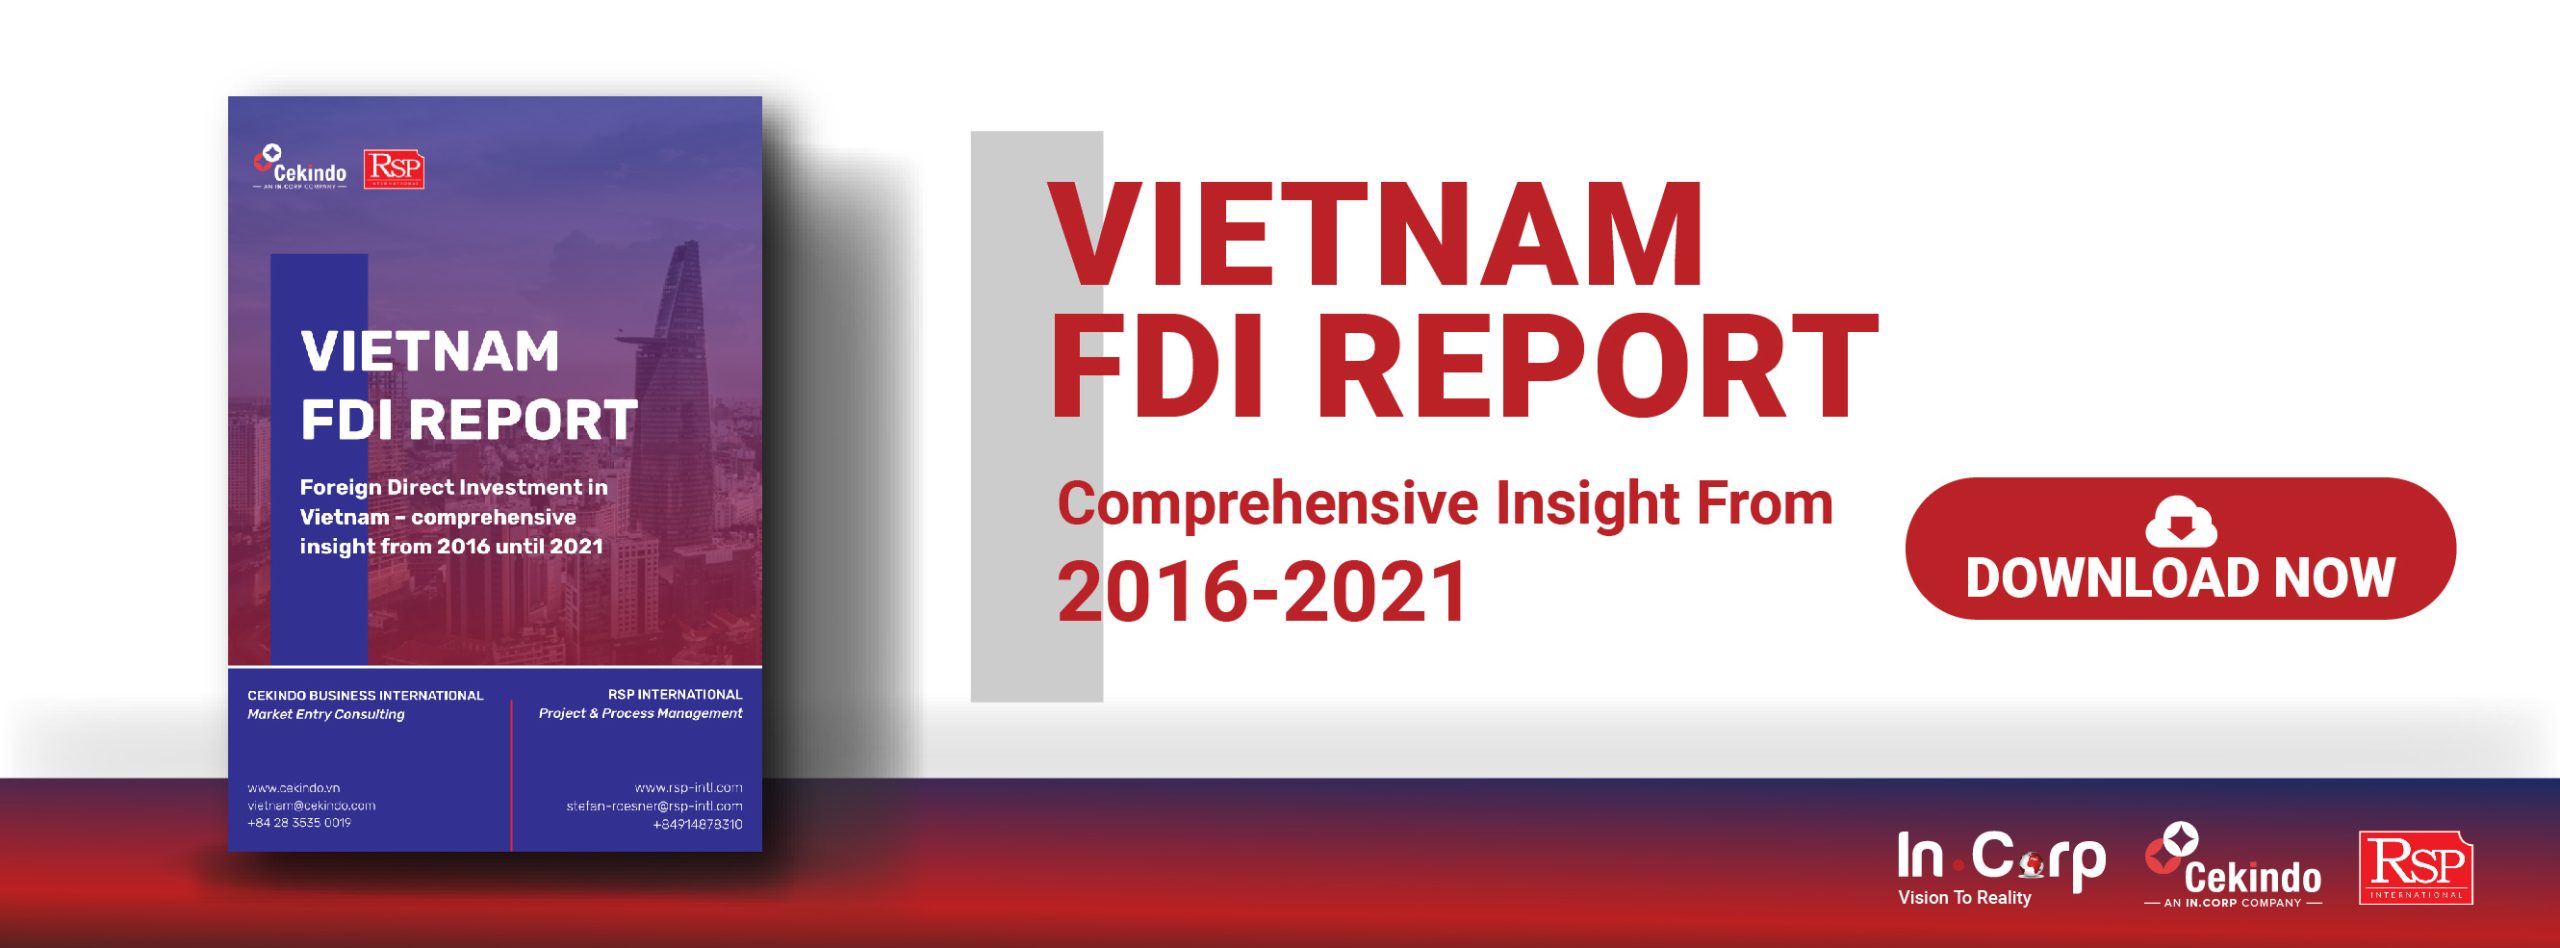 Download the Vietnam 2016-2021 FDI Report